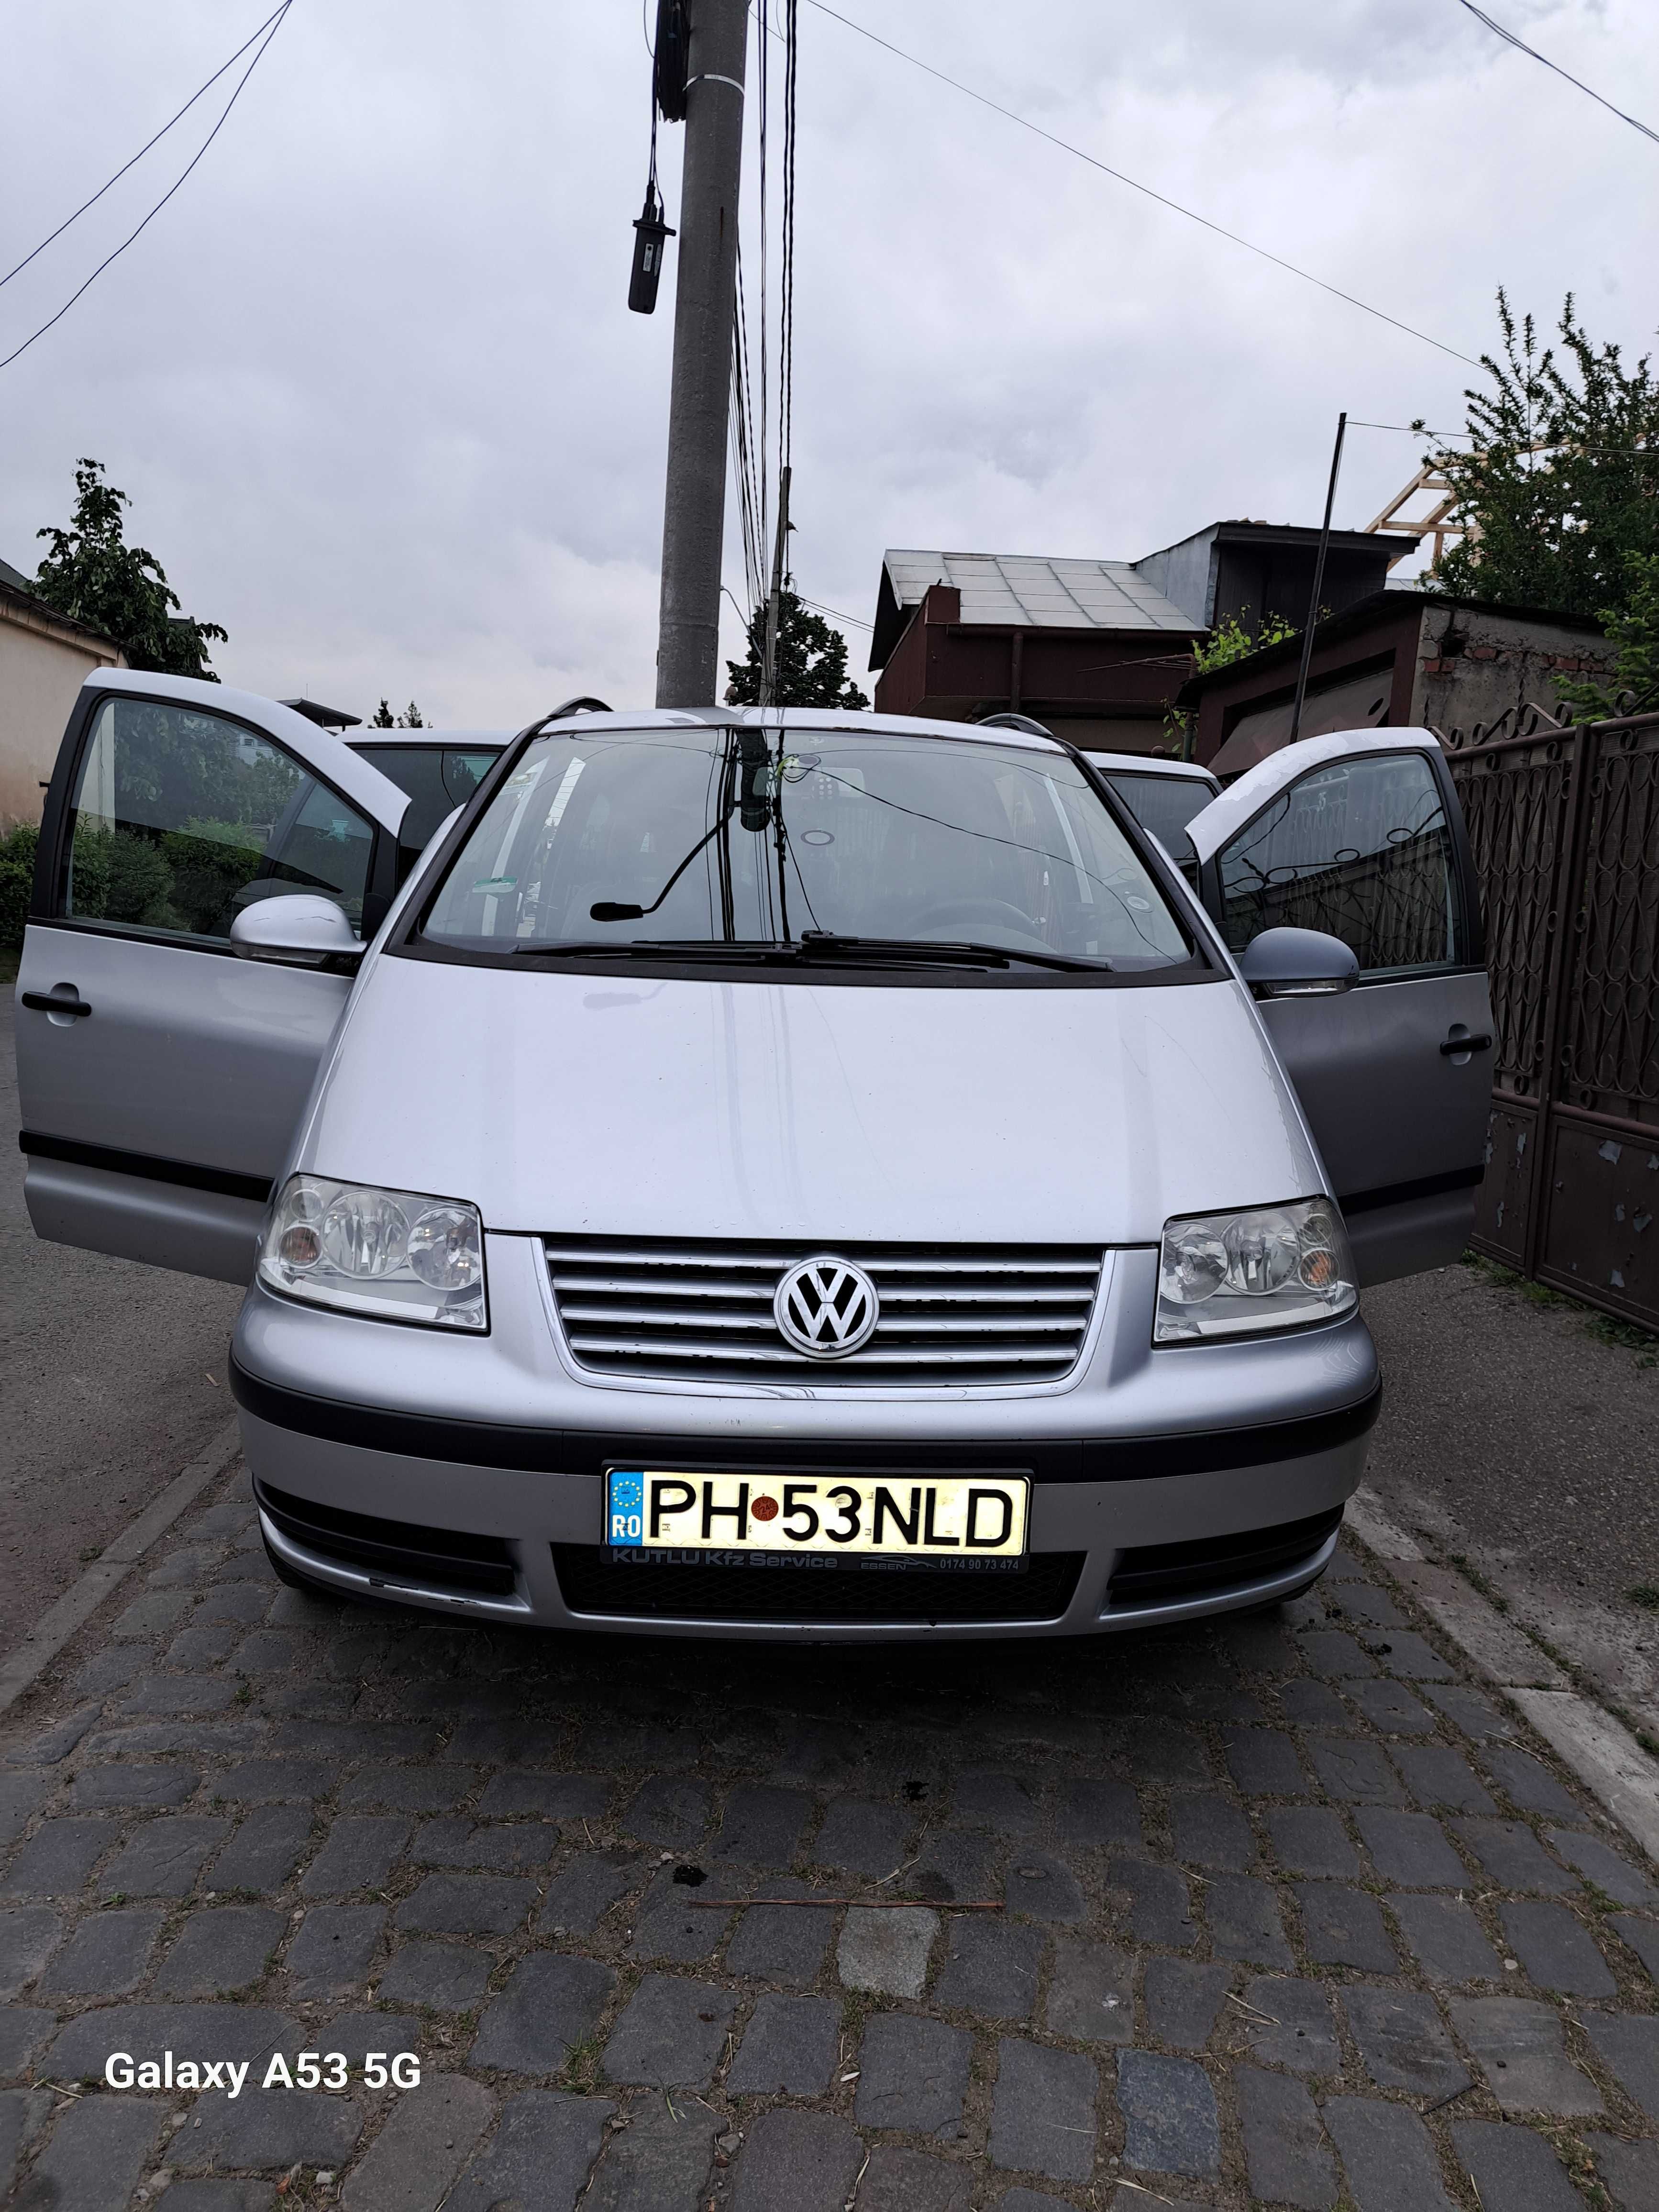 Vand Volkswagen Sharan an 2004 proprietar si Germania si Romania